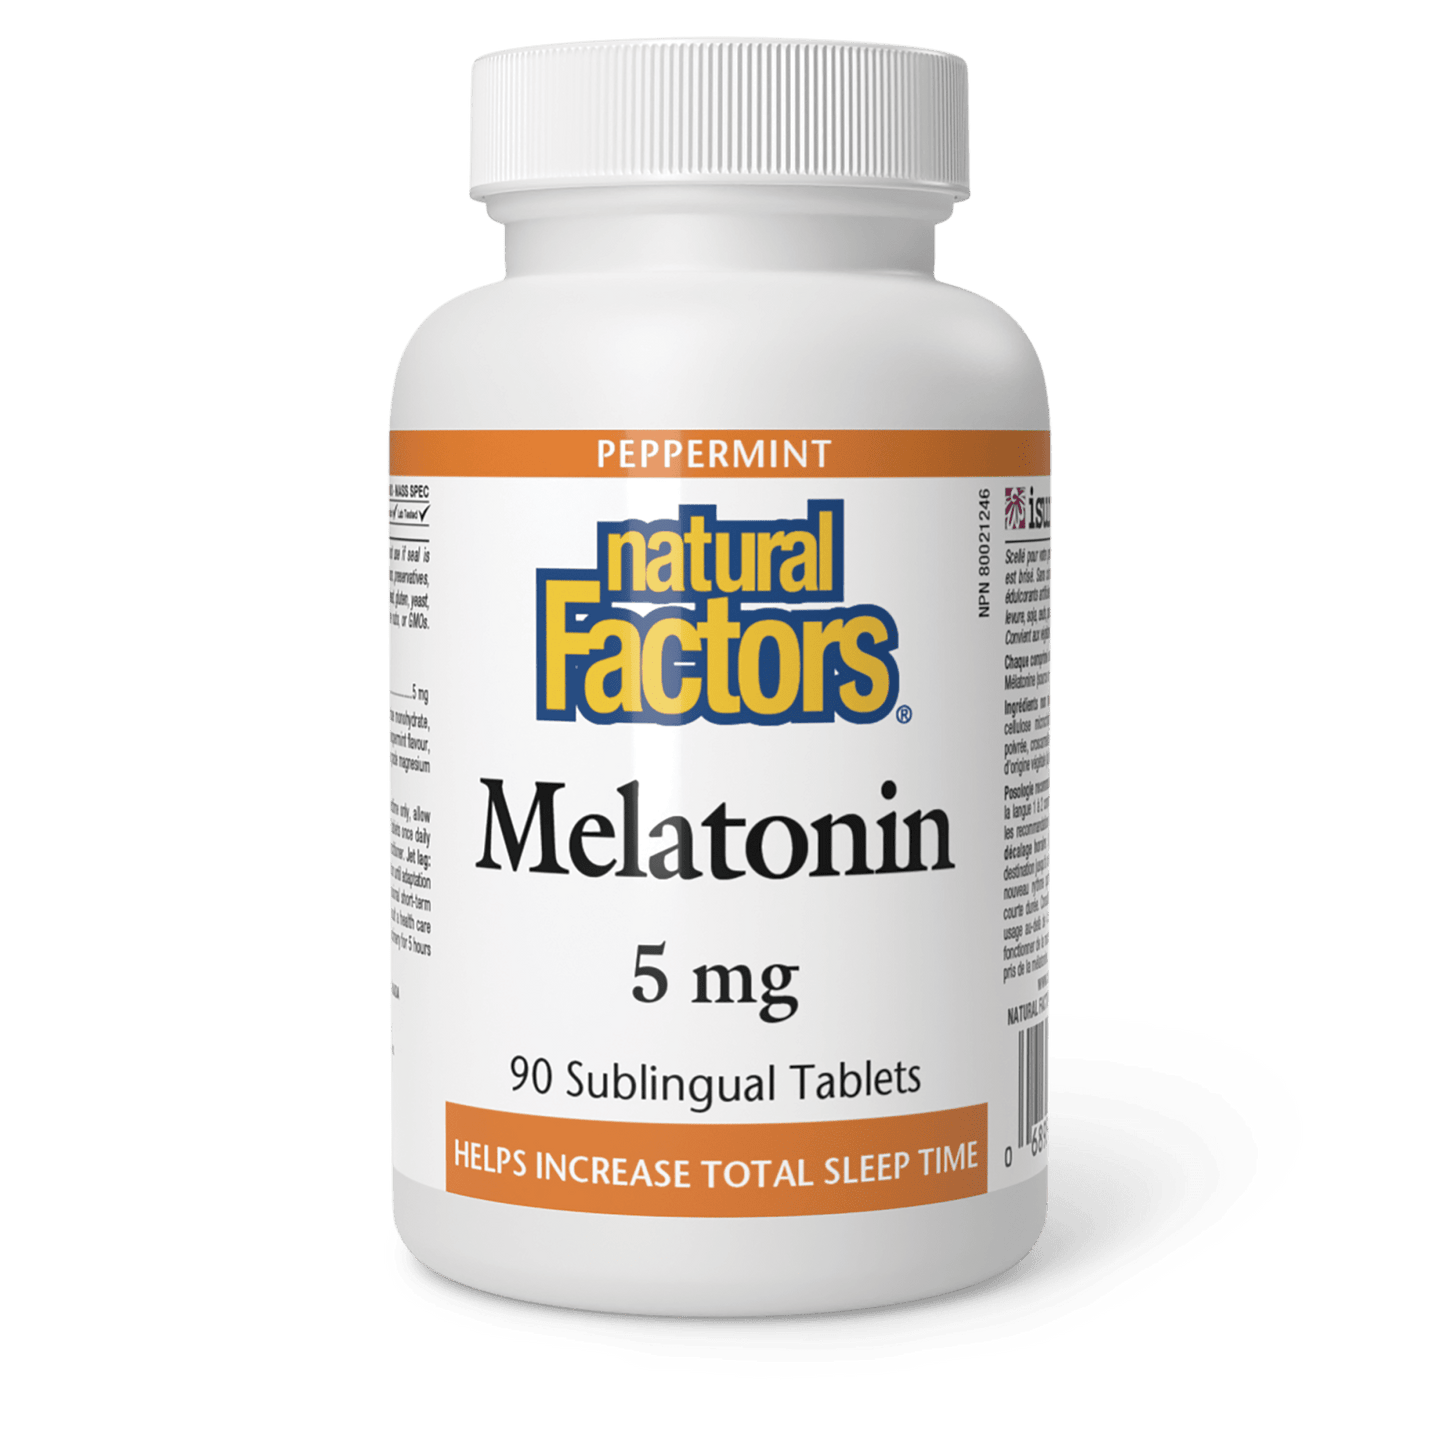 Melatonin 5 mg, Peppermint, Natural Factors|v|image|2717